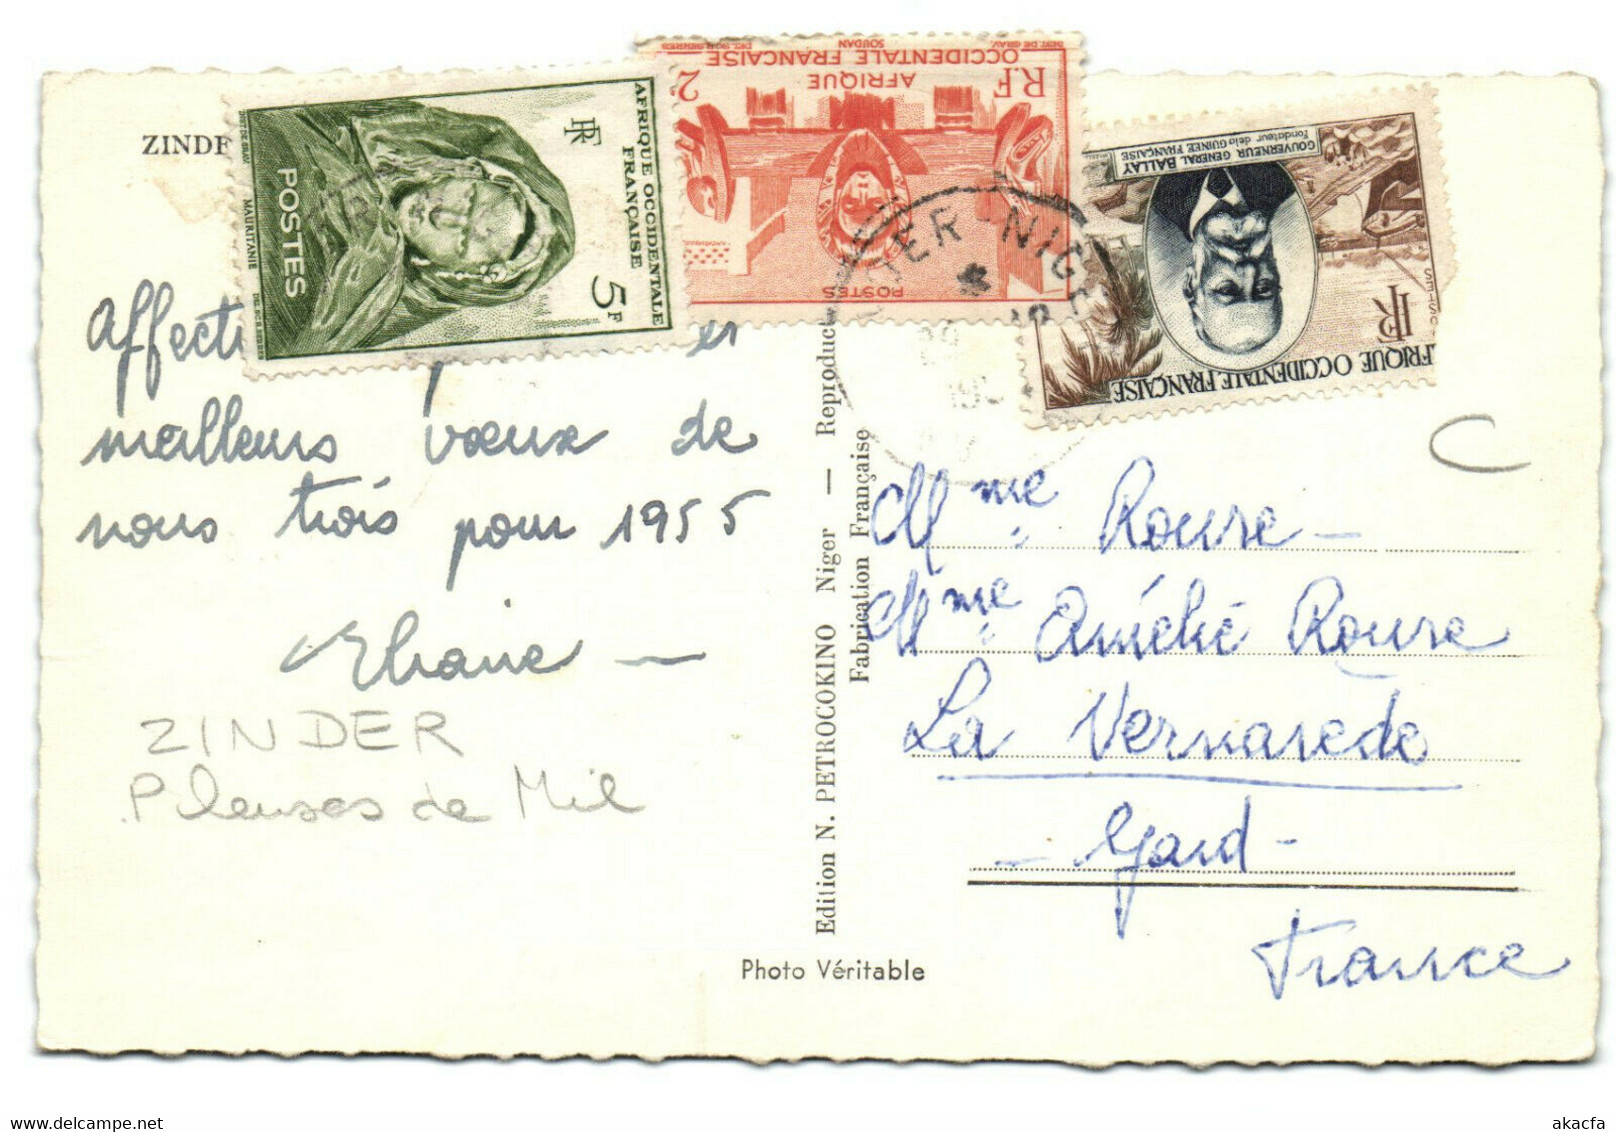 PC NIGER, ZINDER, PLEUSES DE MIL, Vintage REAL PHOTO Postcard (b33277) - Niger